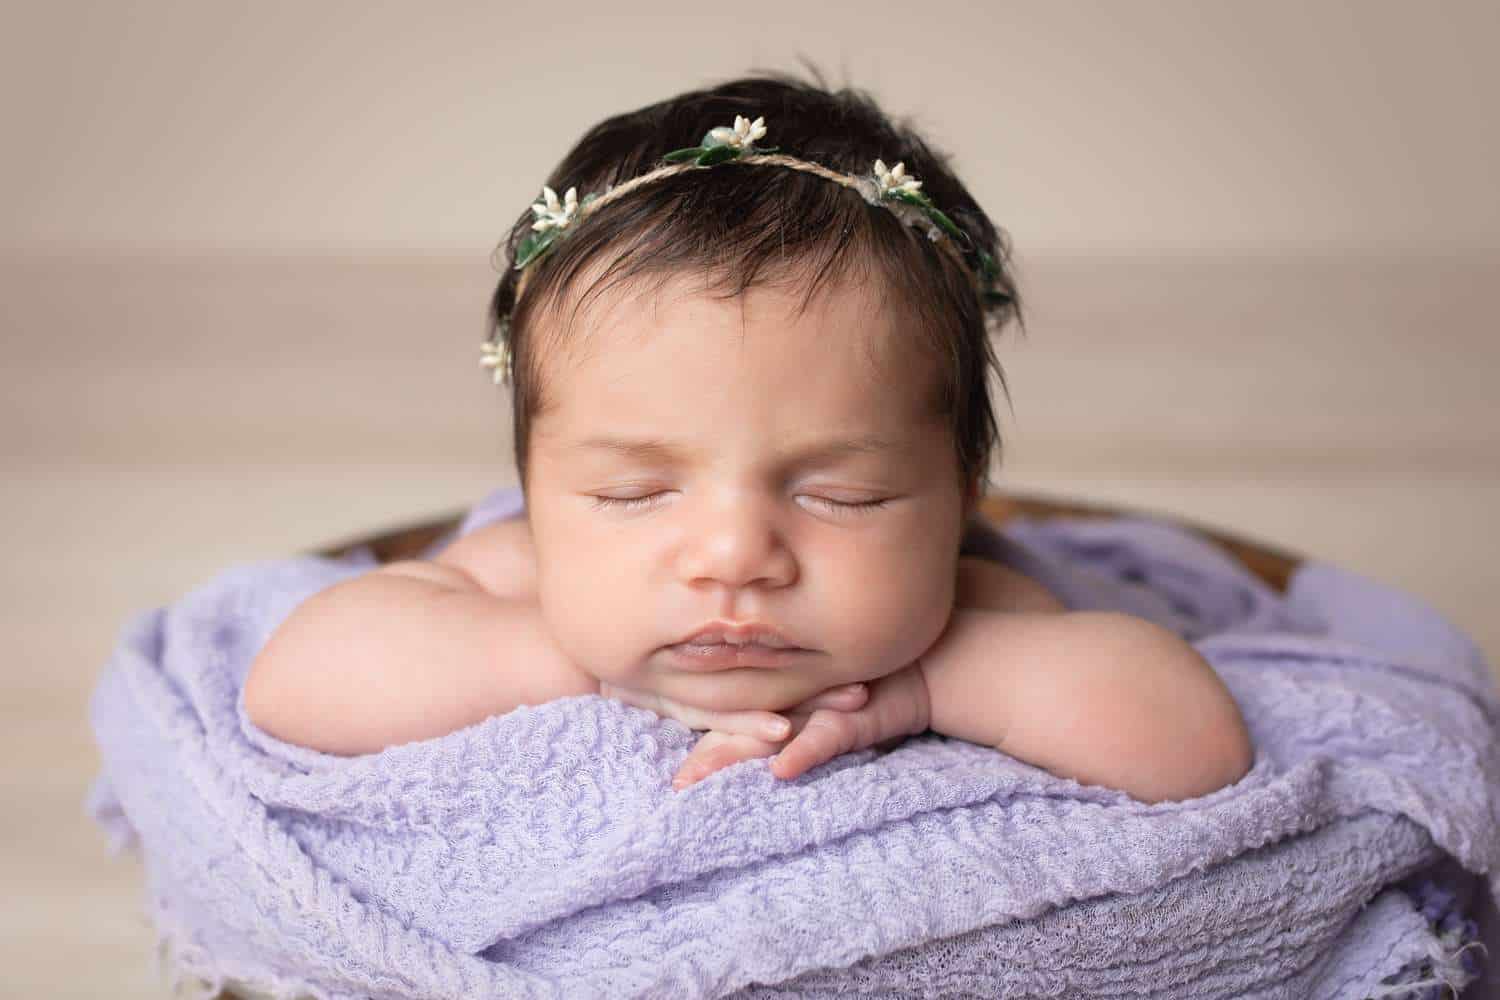 newborn photographer in rochester ny captures newborn baby girl chin on hands